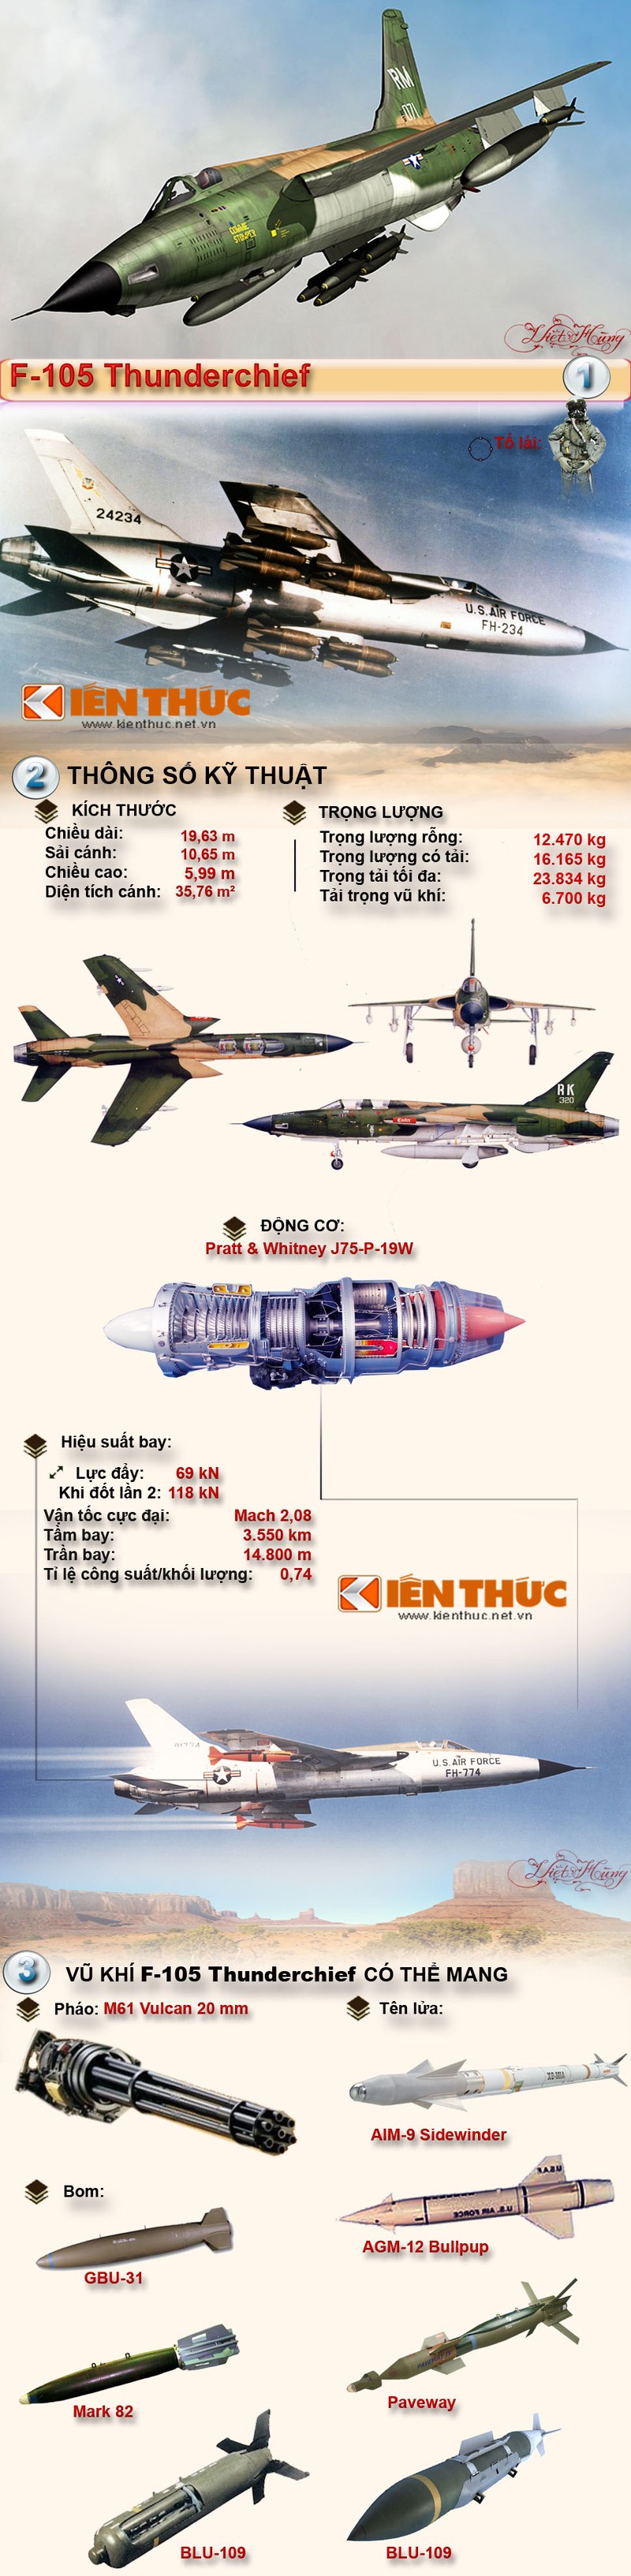 Infographic: Dong chien dau co the ky bai tran o Viet Nam (5)